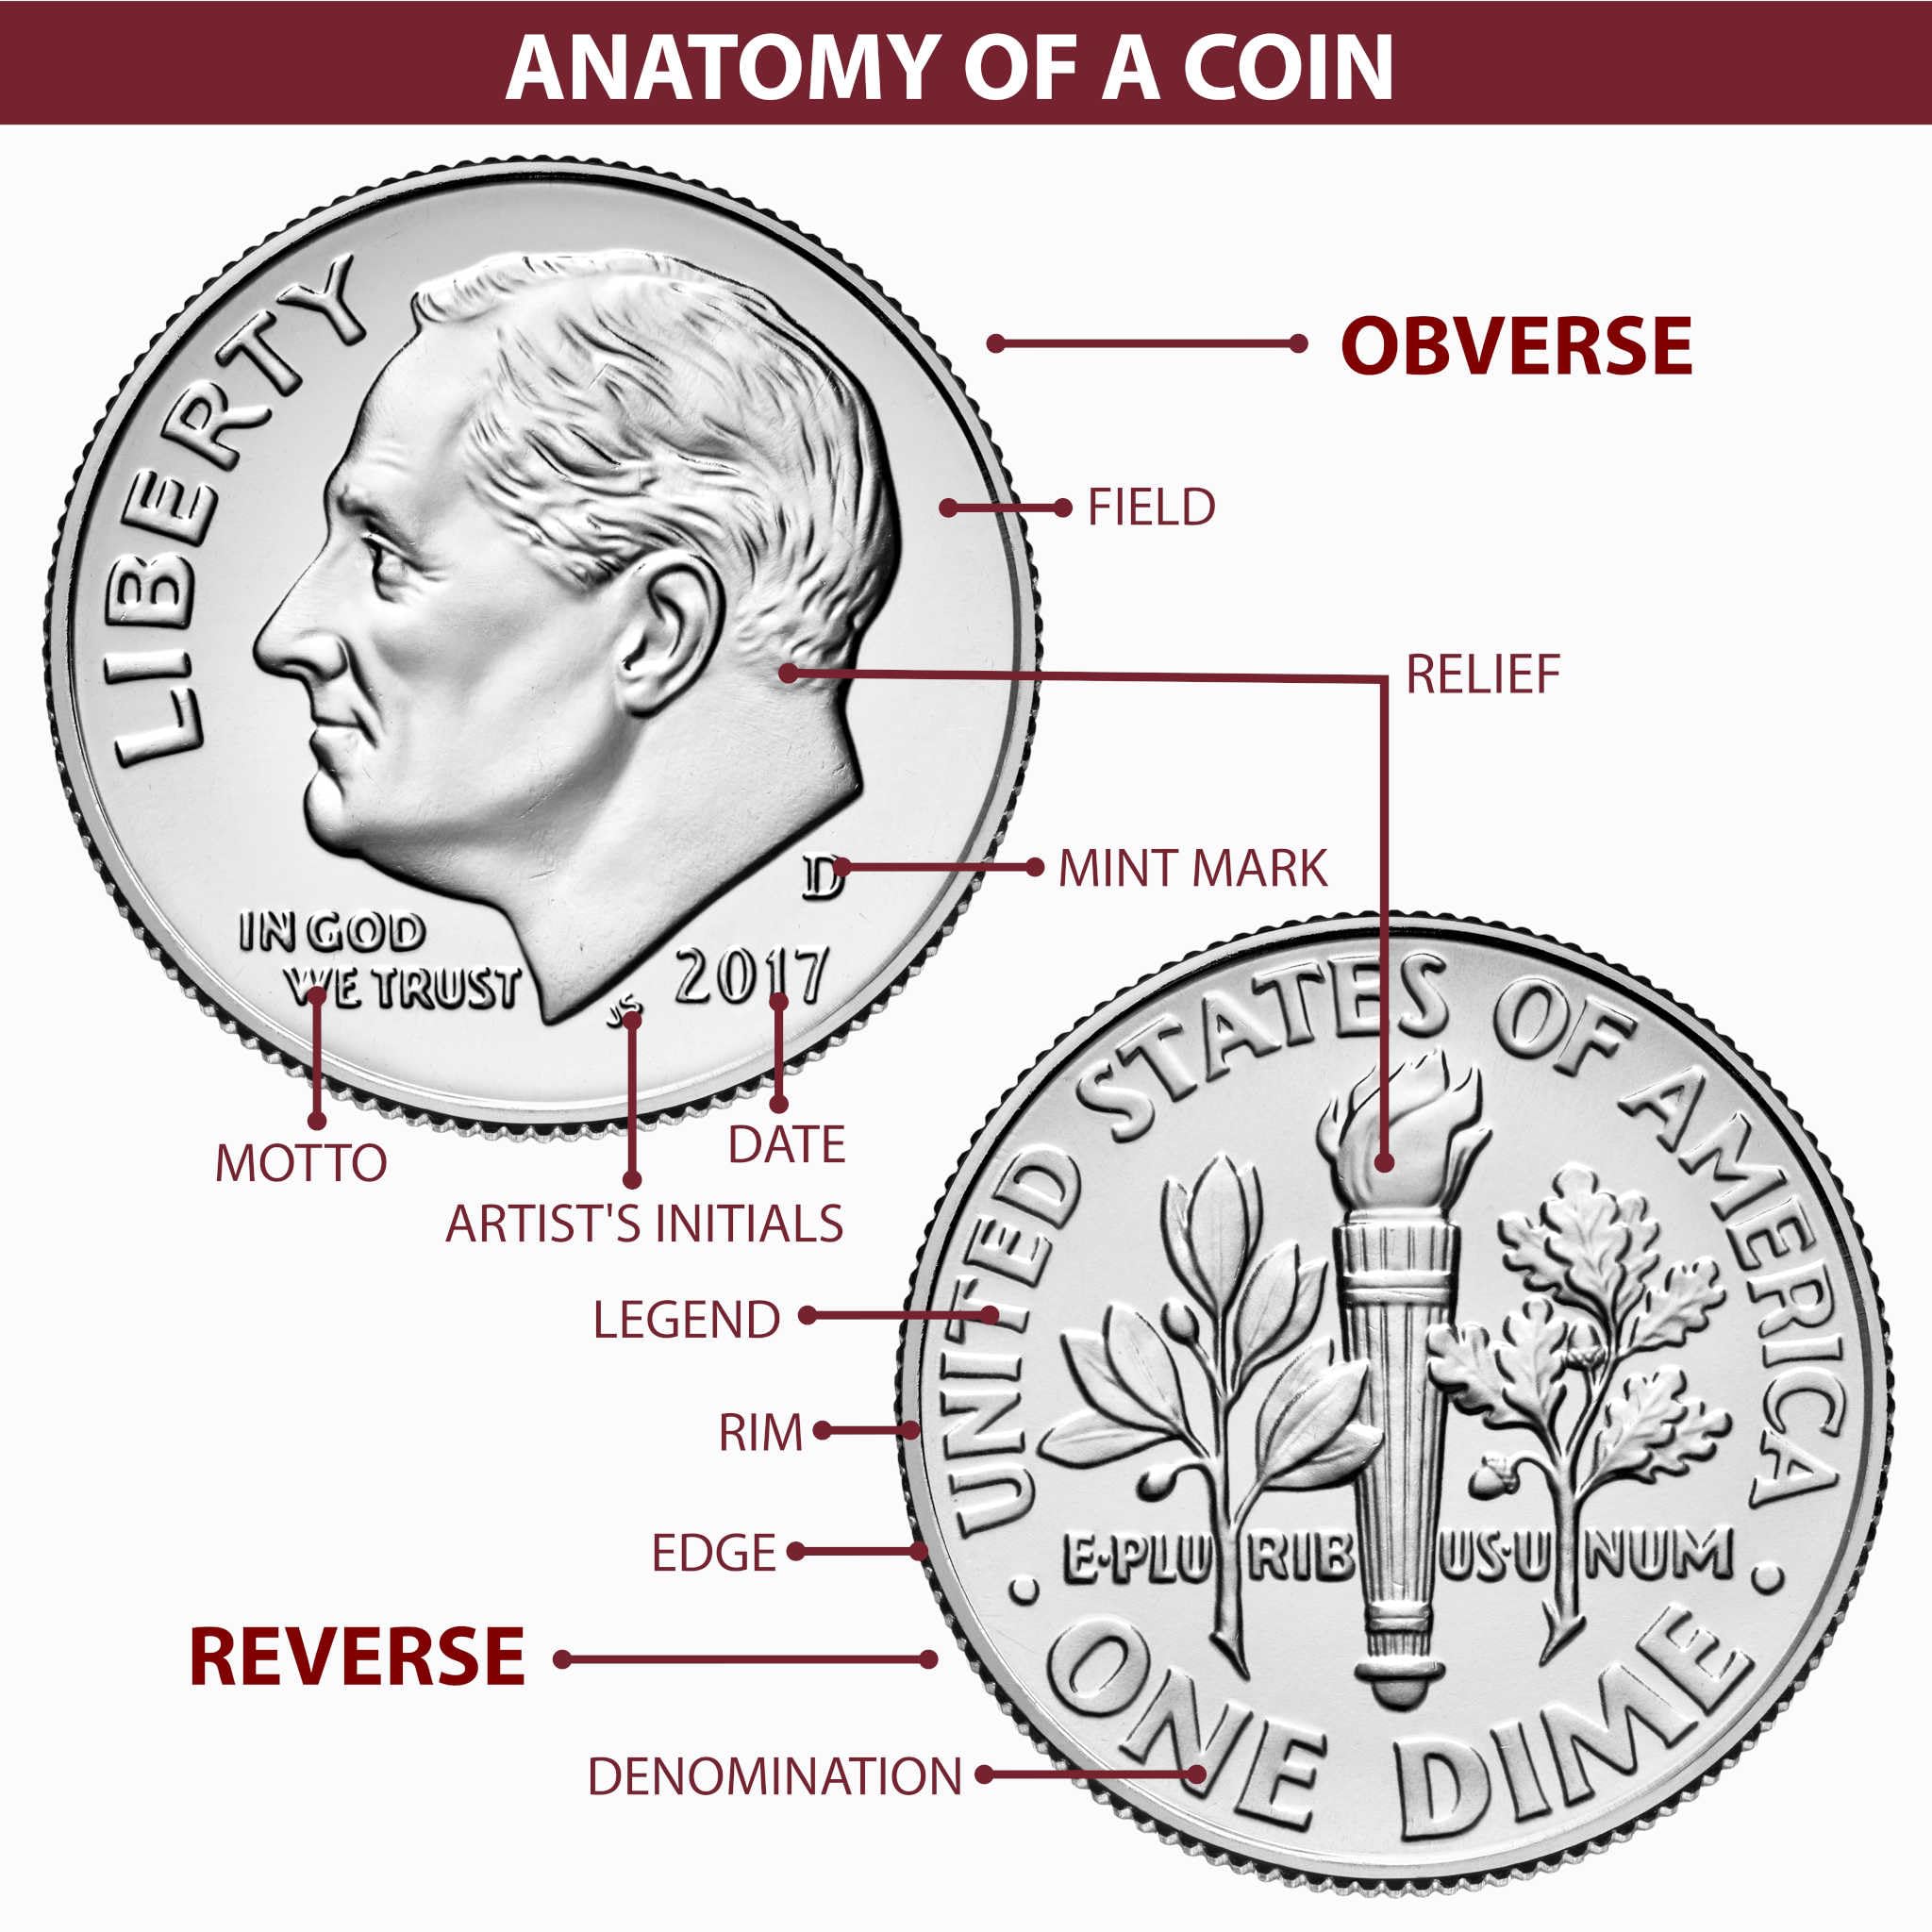 1938 D Indian Head Buffalo Nickel 5 Cent Piece VF Very Fine 5c US Coin